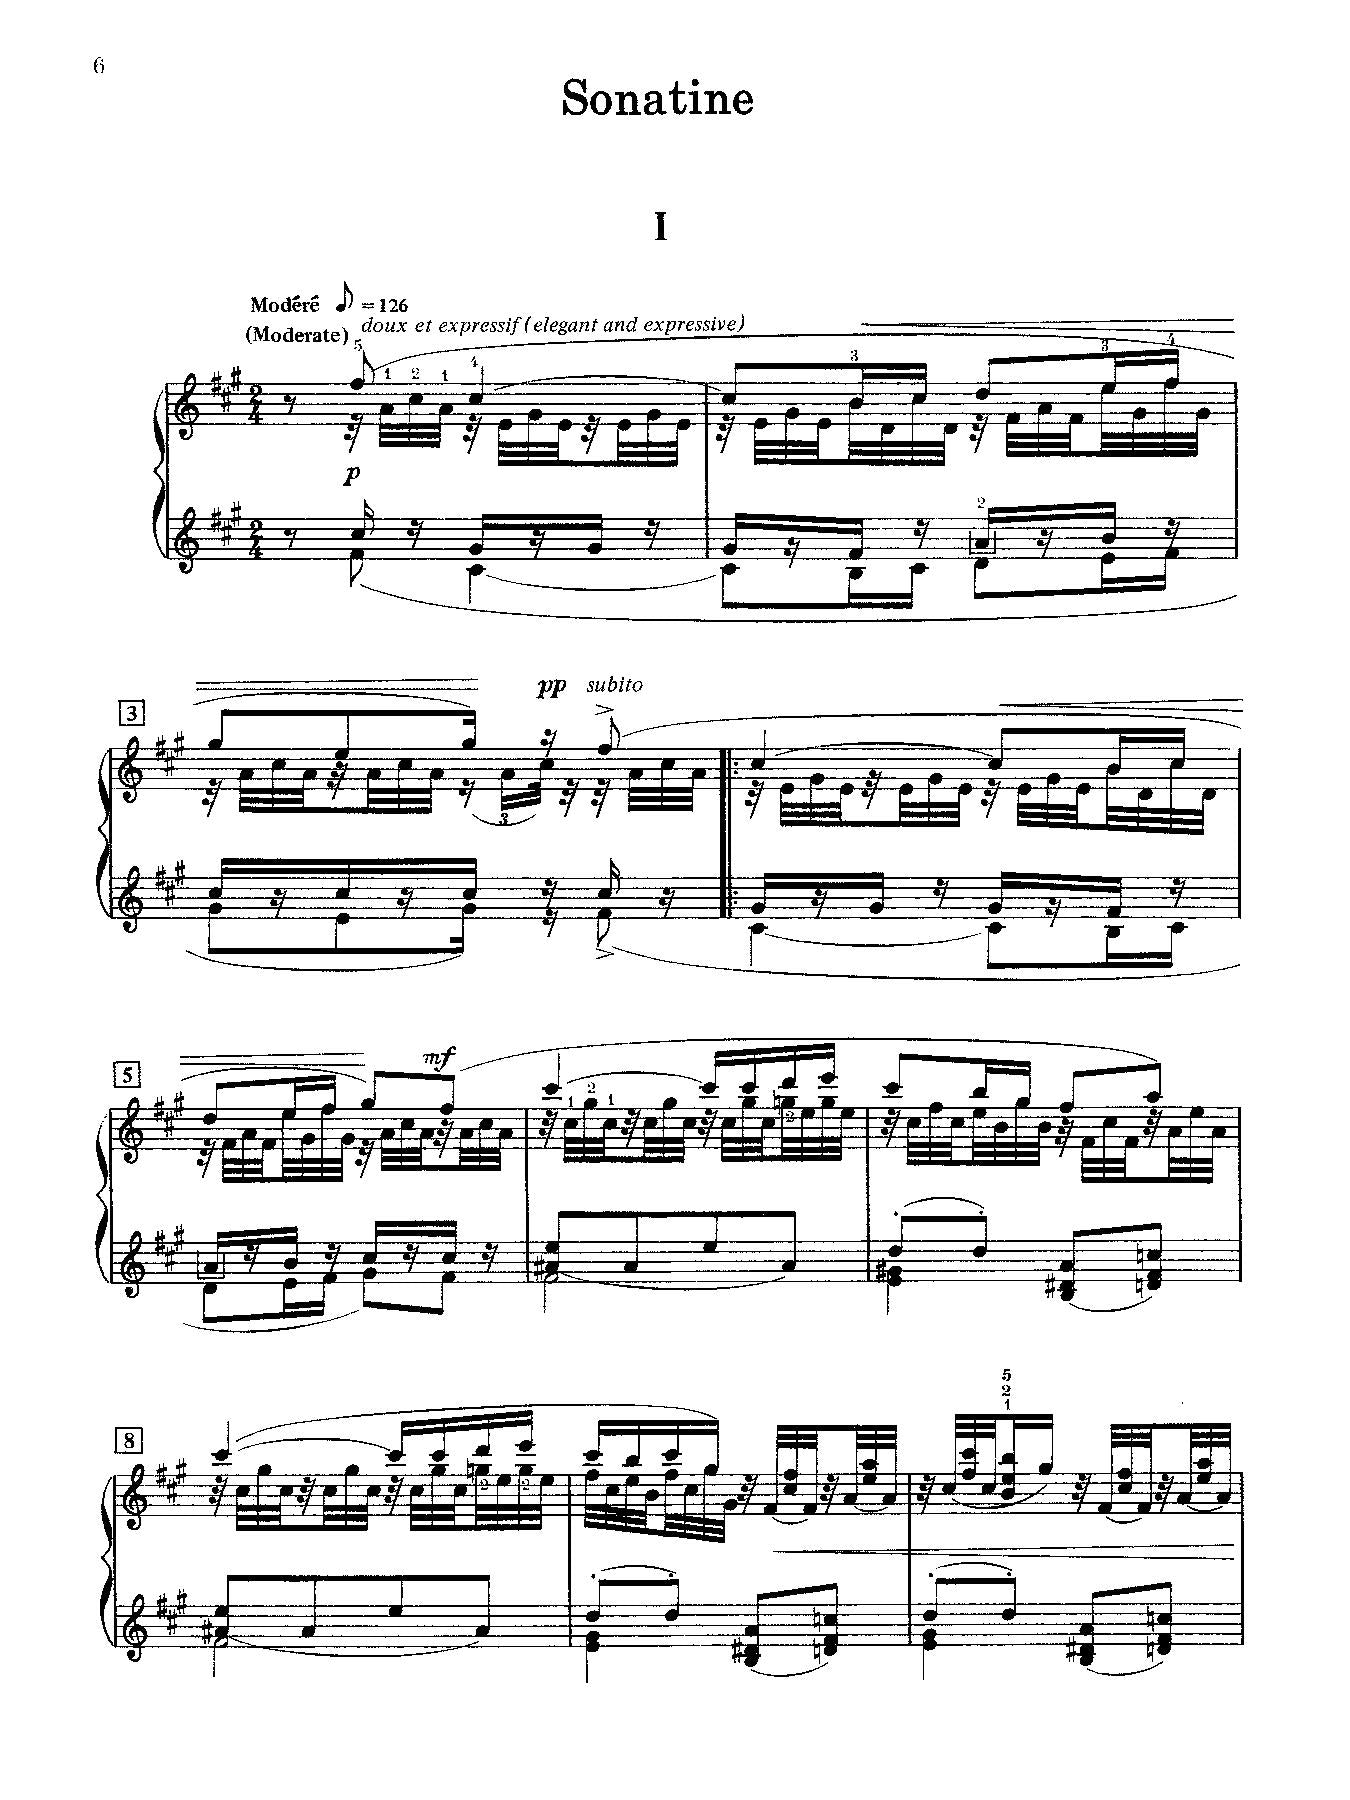 Ravel: Sonatine